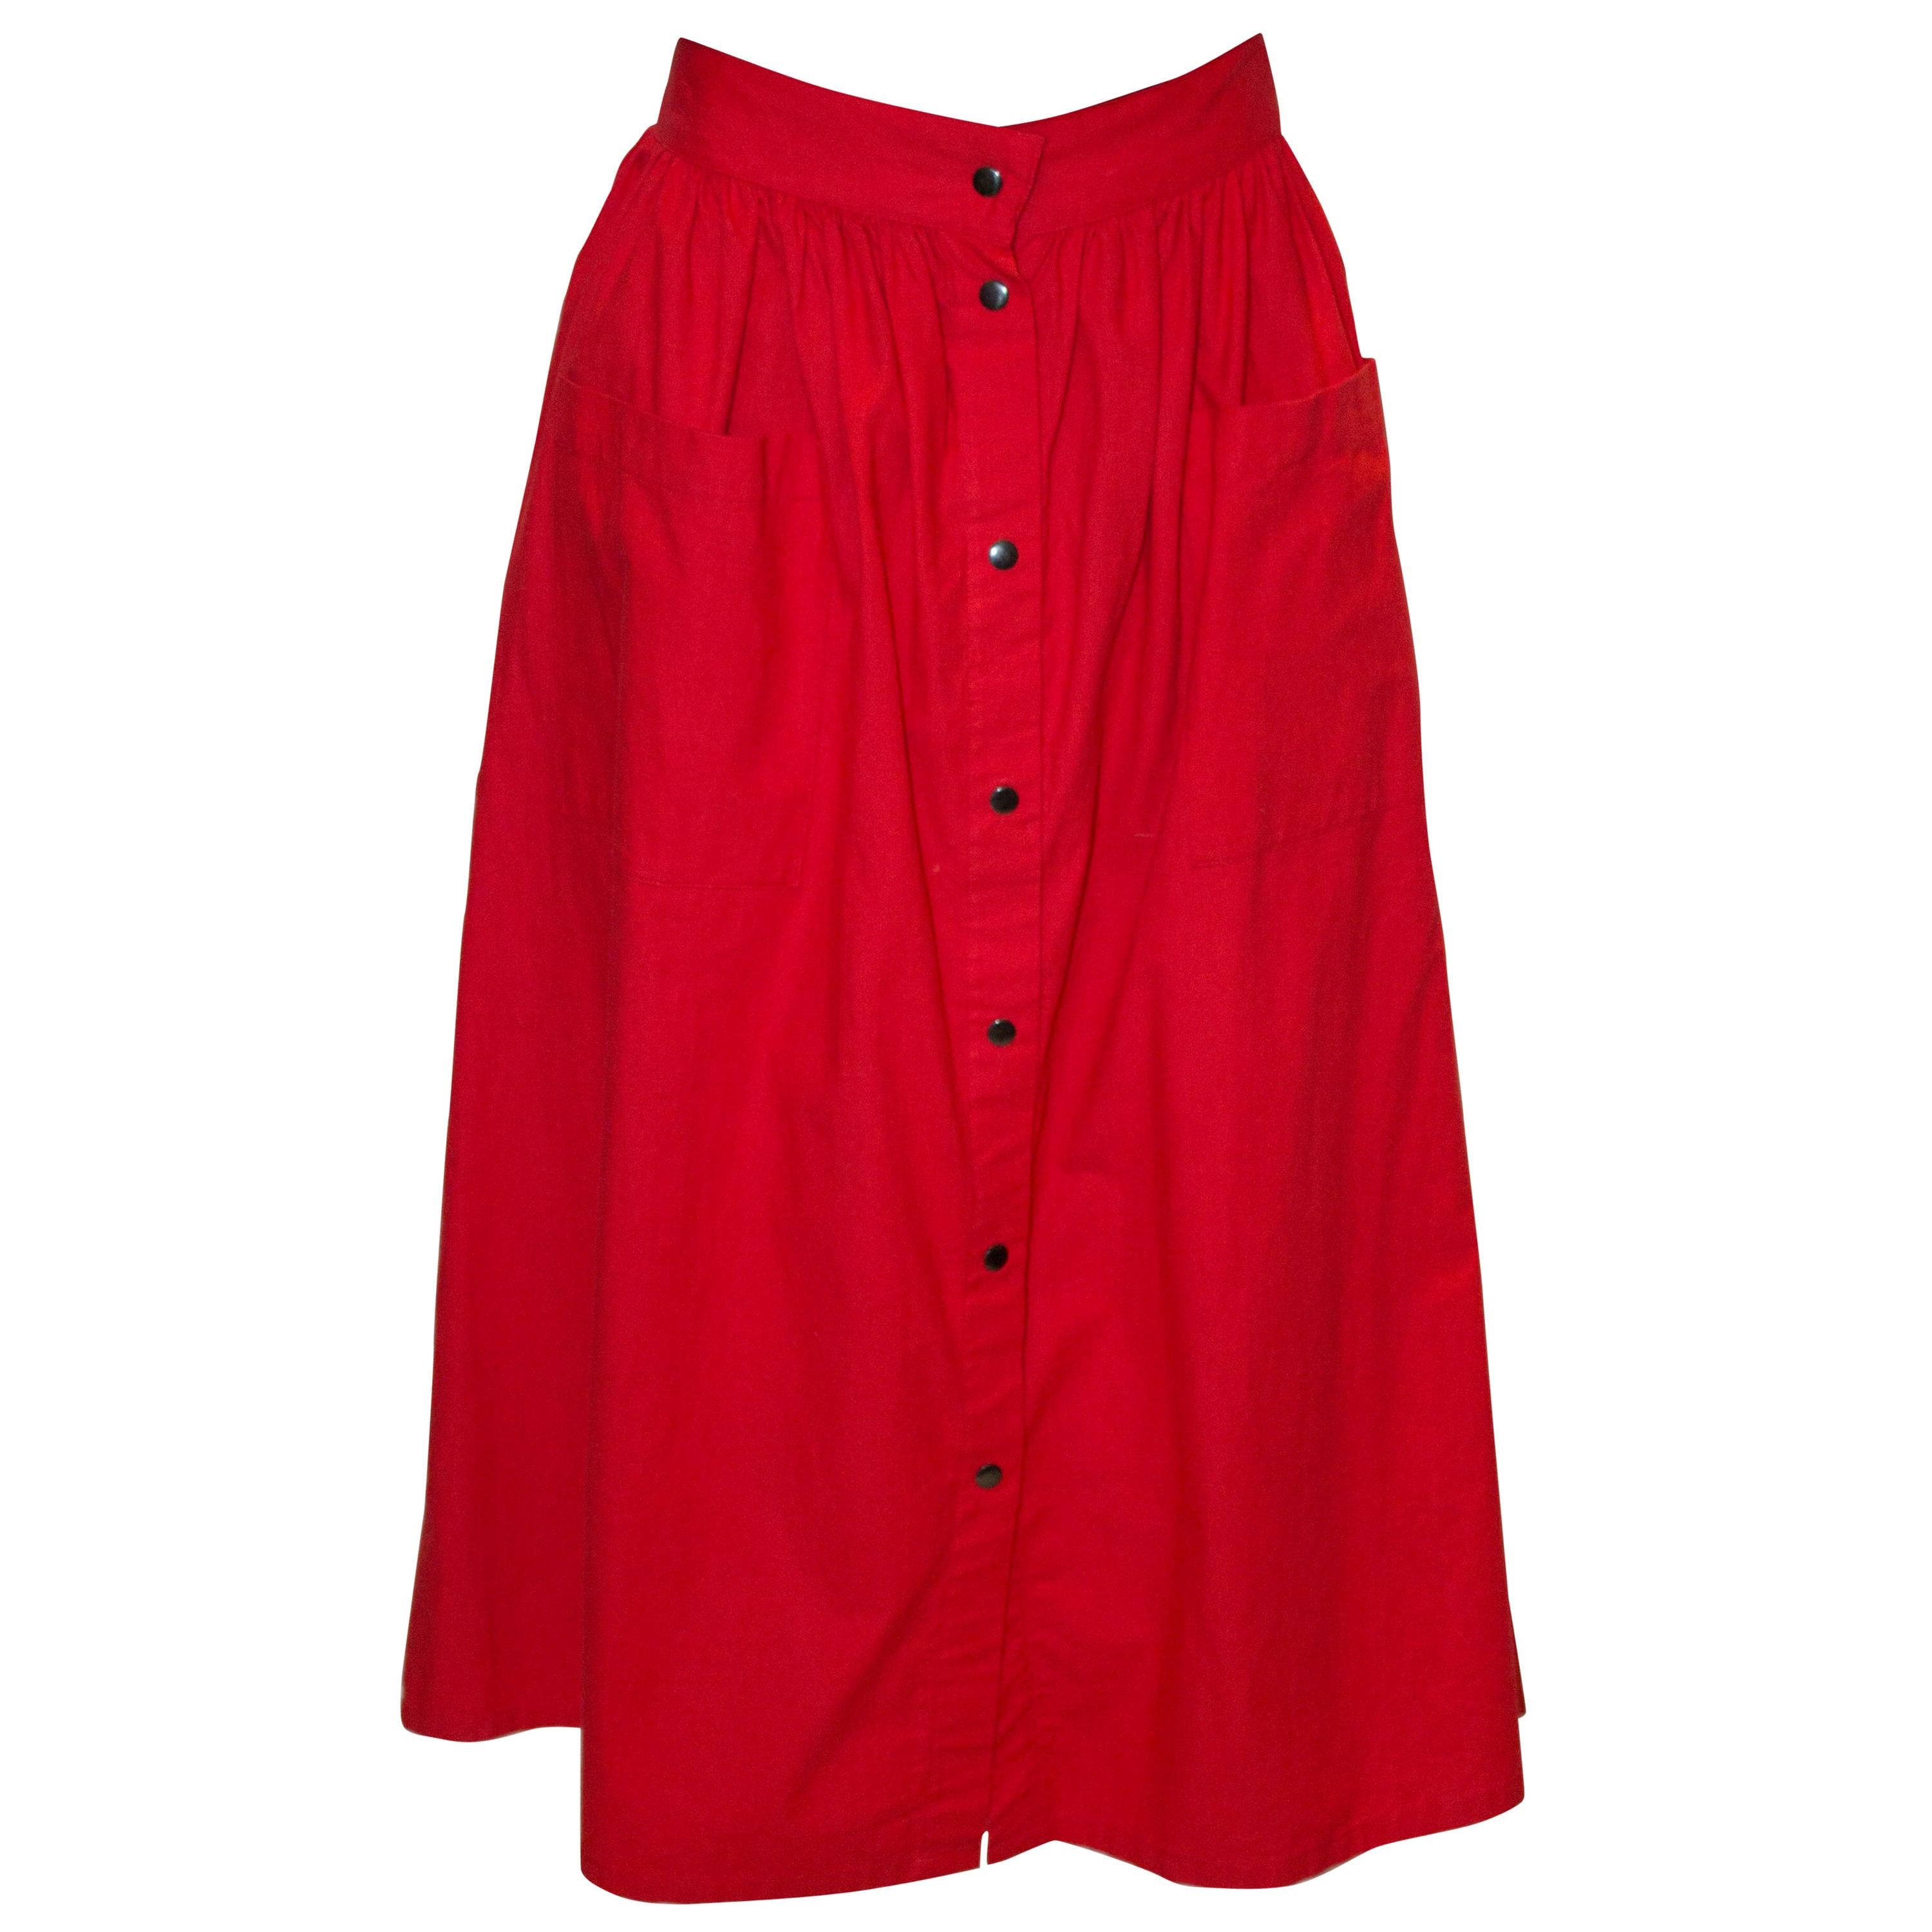 Vintage Biba Cotton Skirt with Pockets